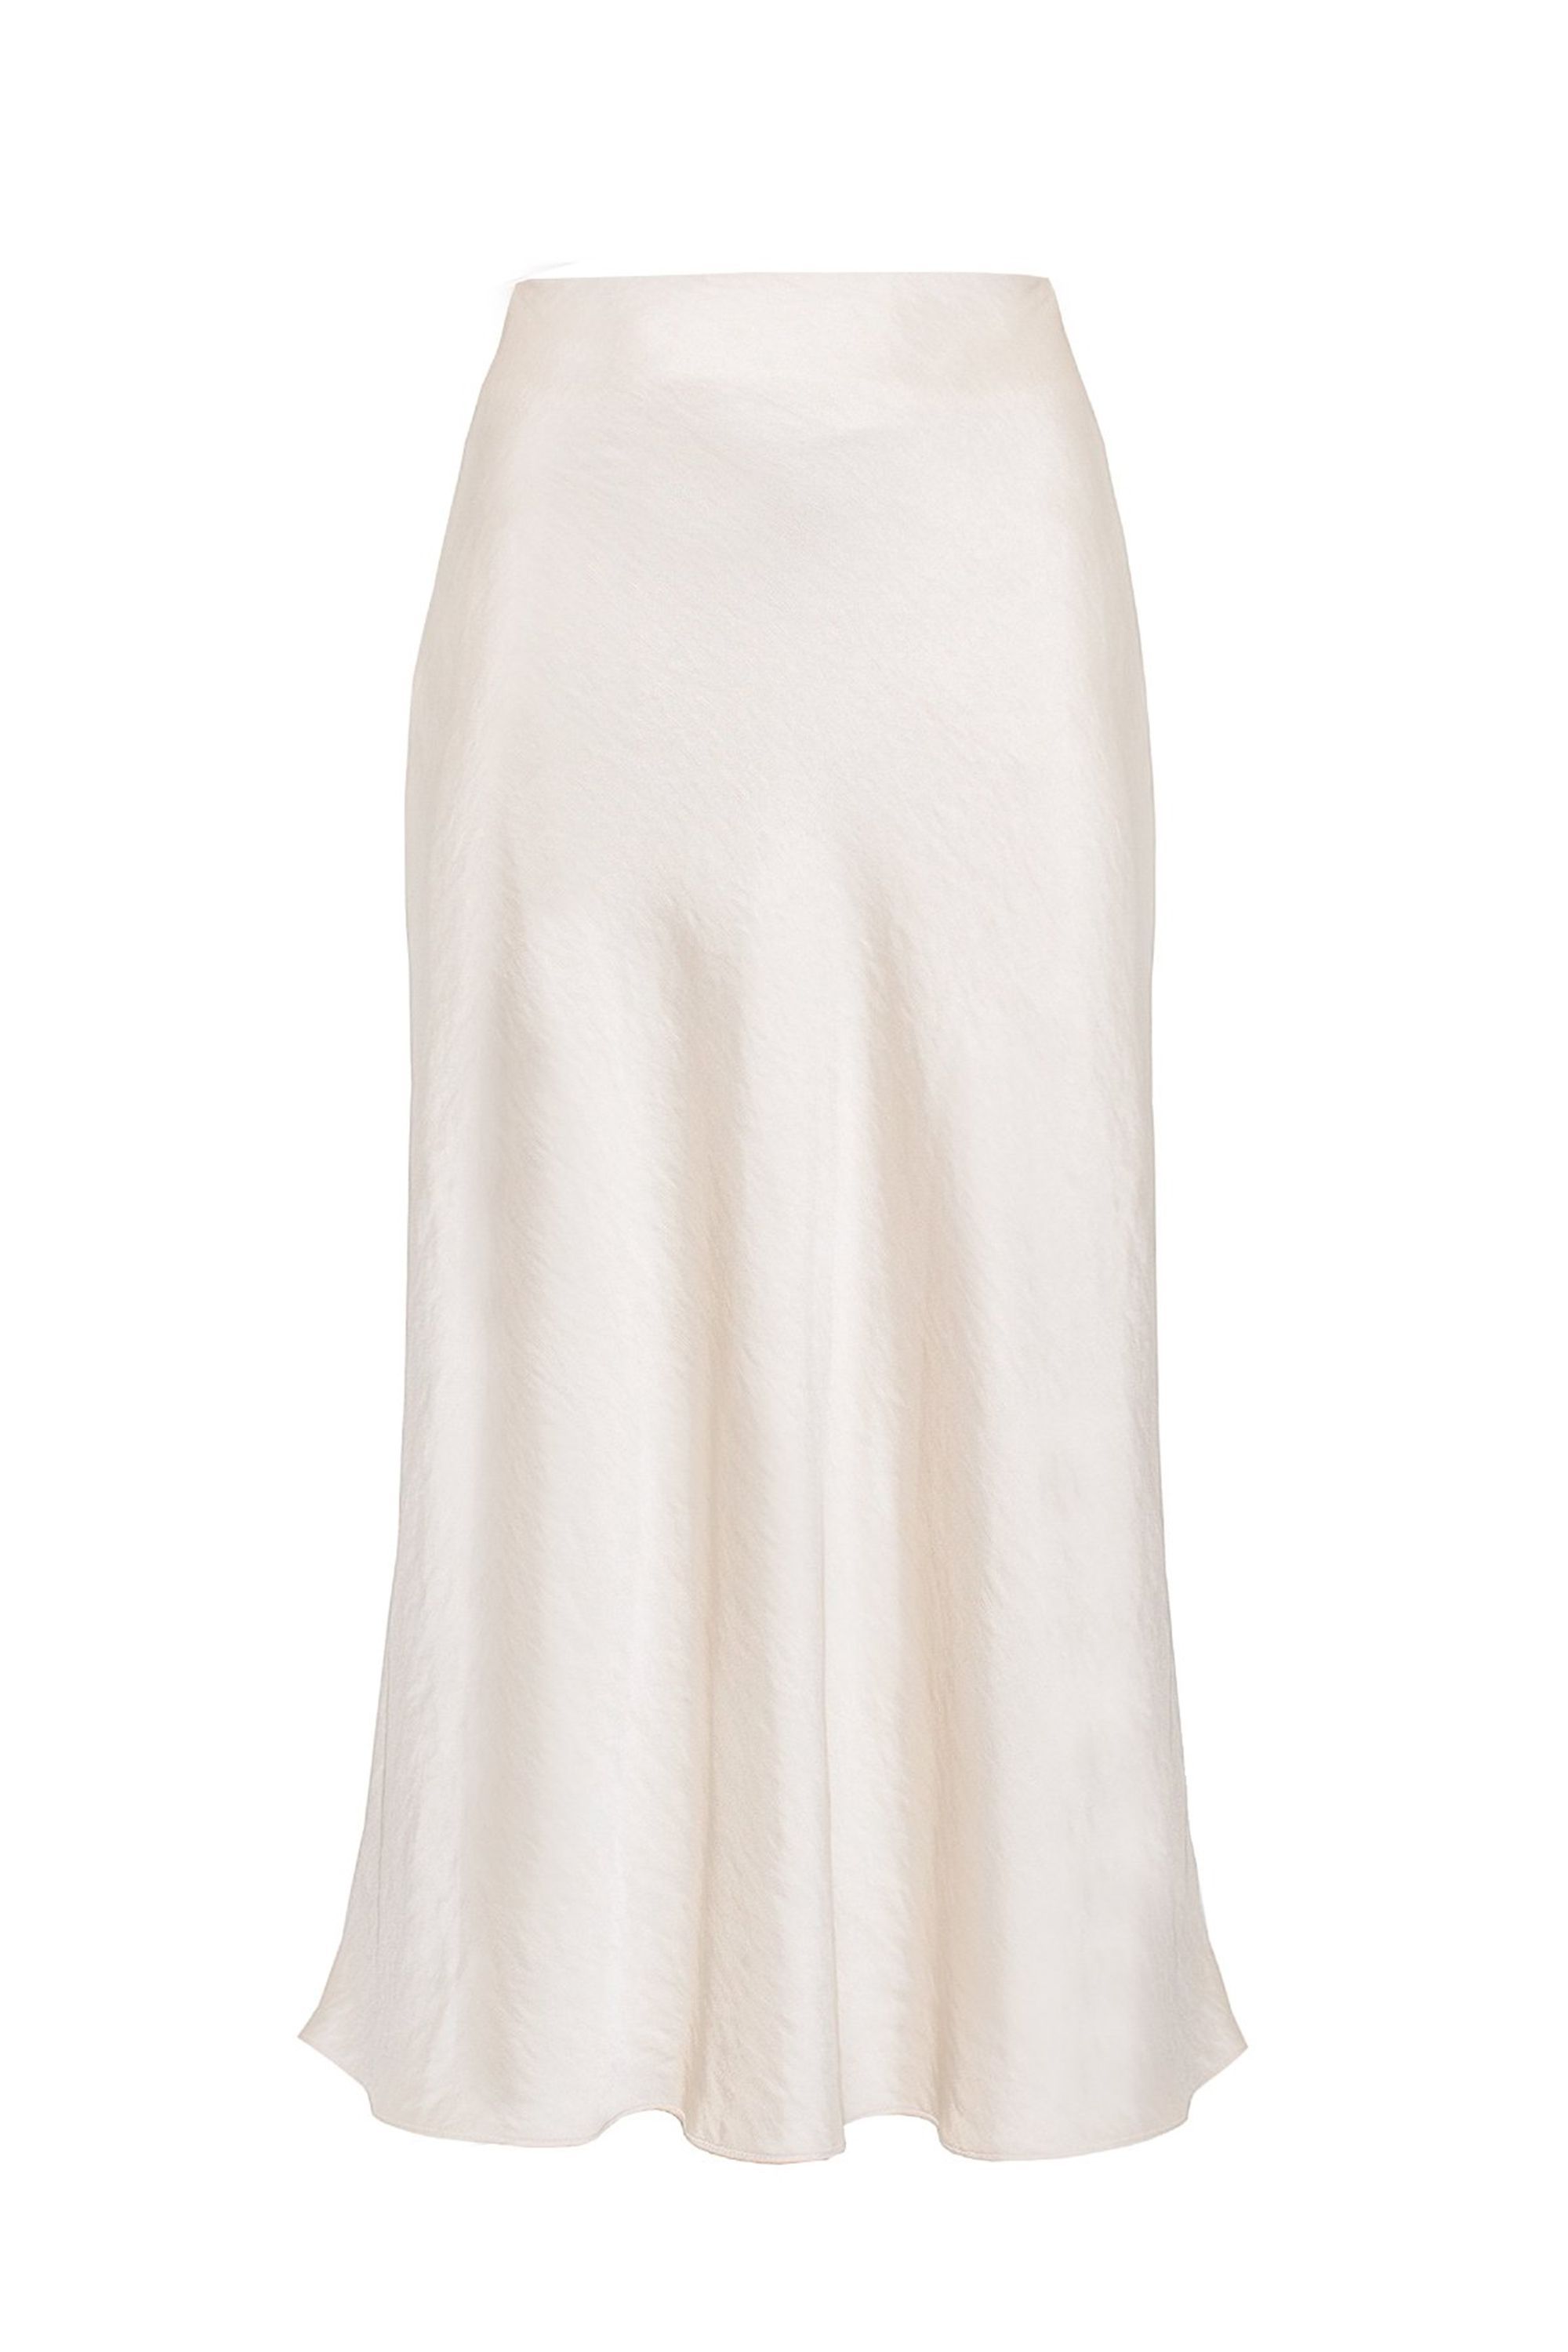 The Best Silk Slip Skirts to Shop in ...